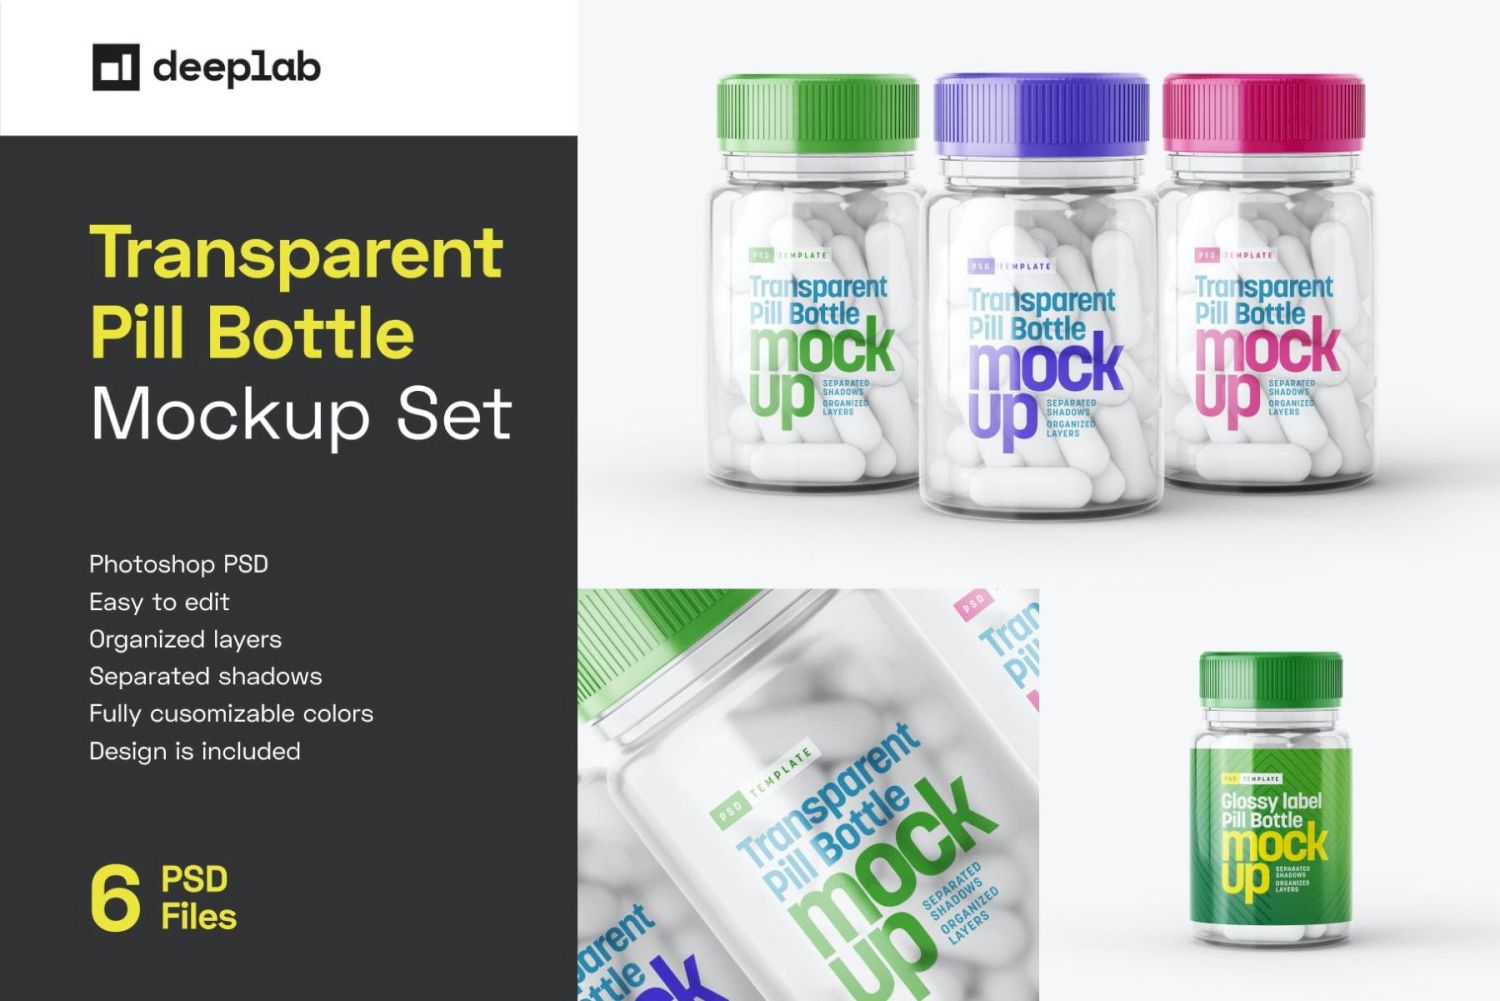 透明药瓶样机套装 Transparent Pill Bottle Mockup Set插图